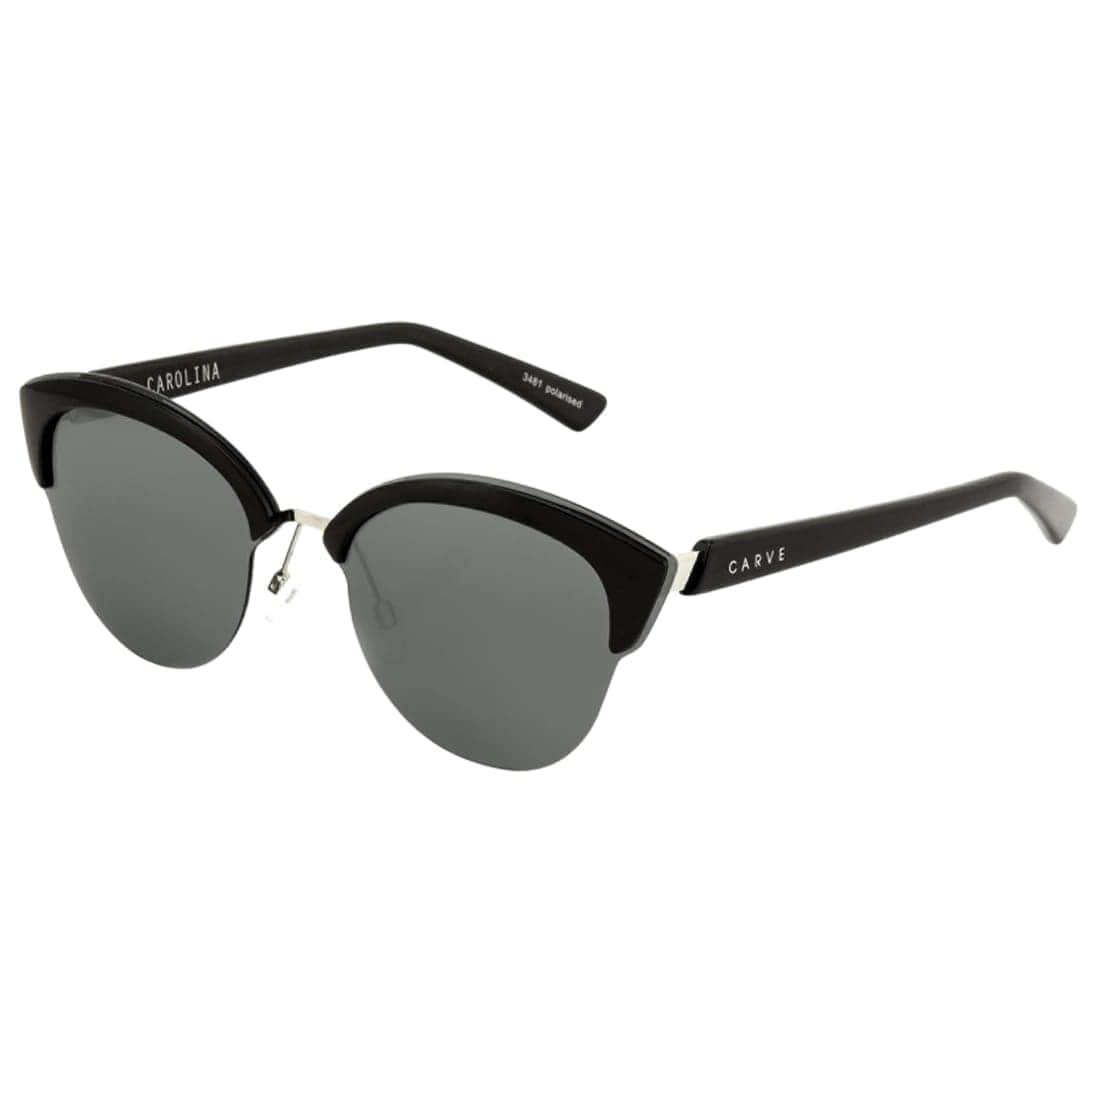 Carve Carolina Polarised Sunglasses - Black/Grey